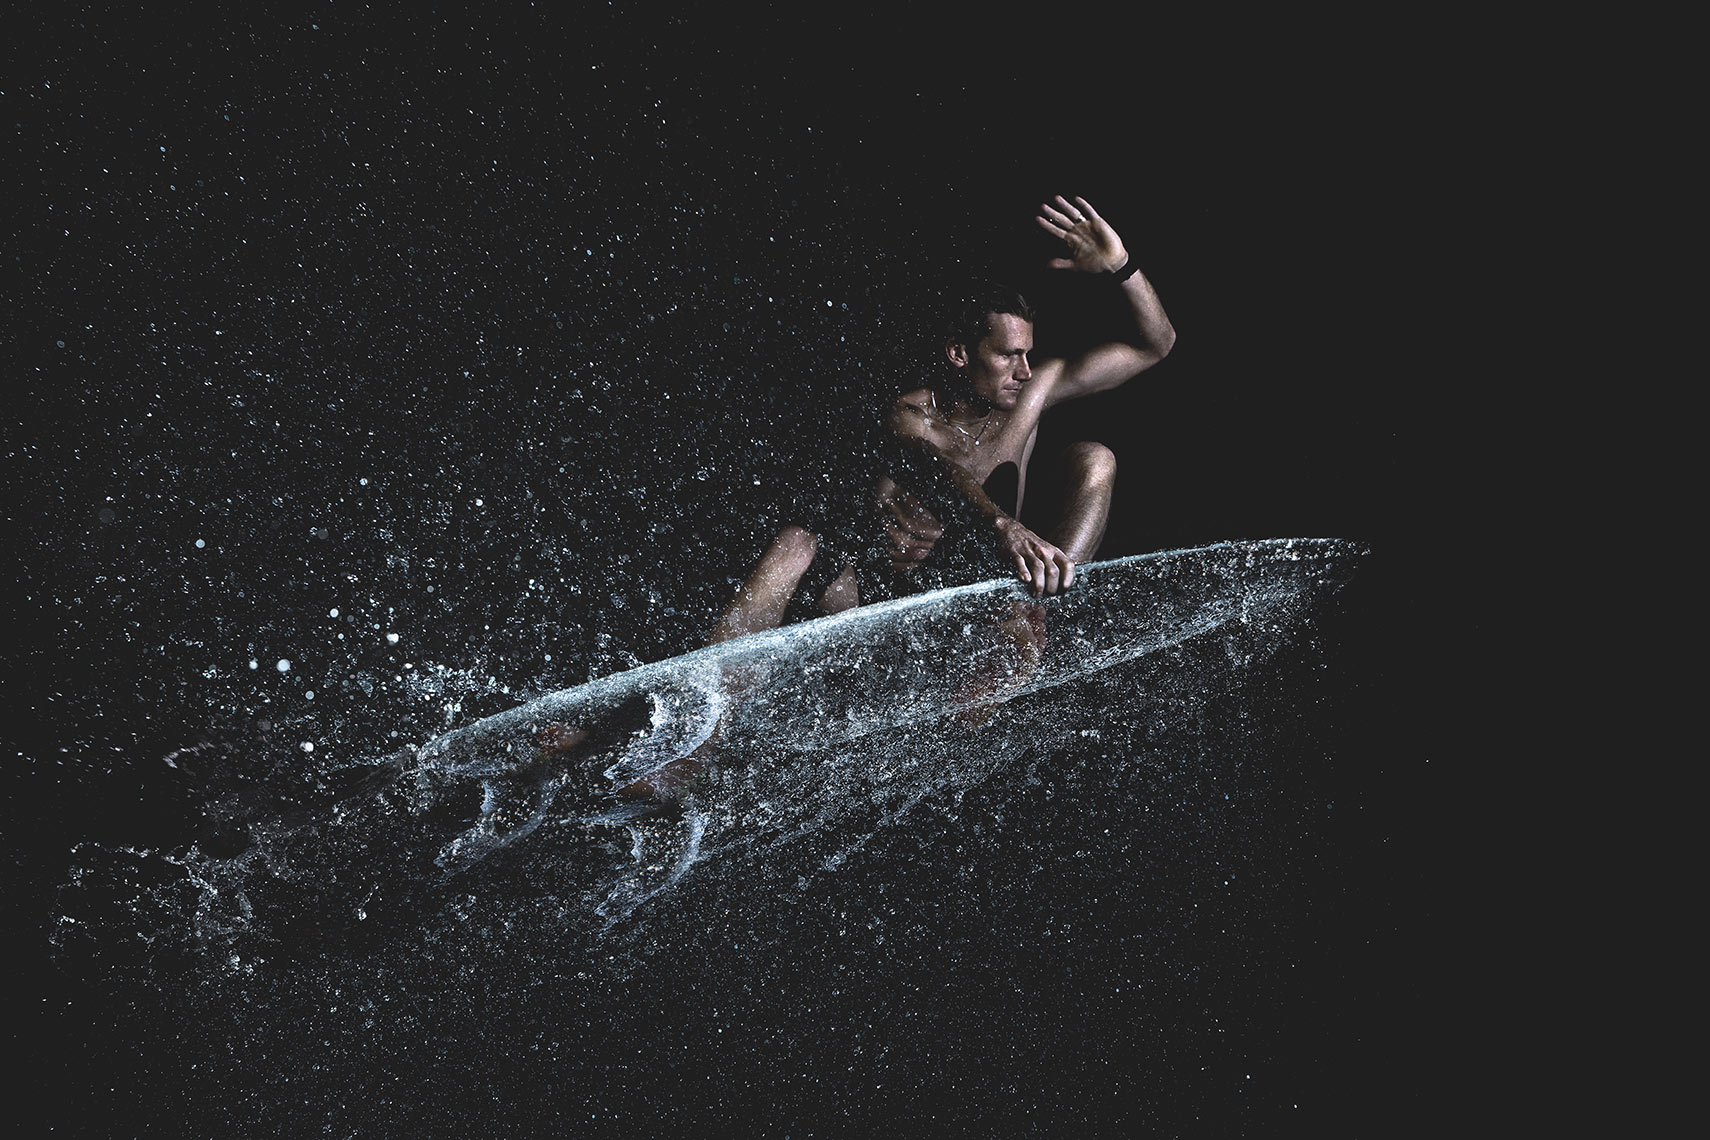 Professional surfer advertising image